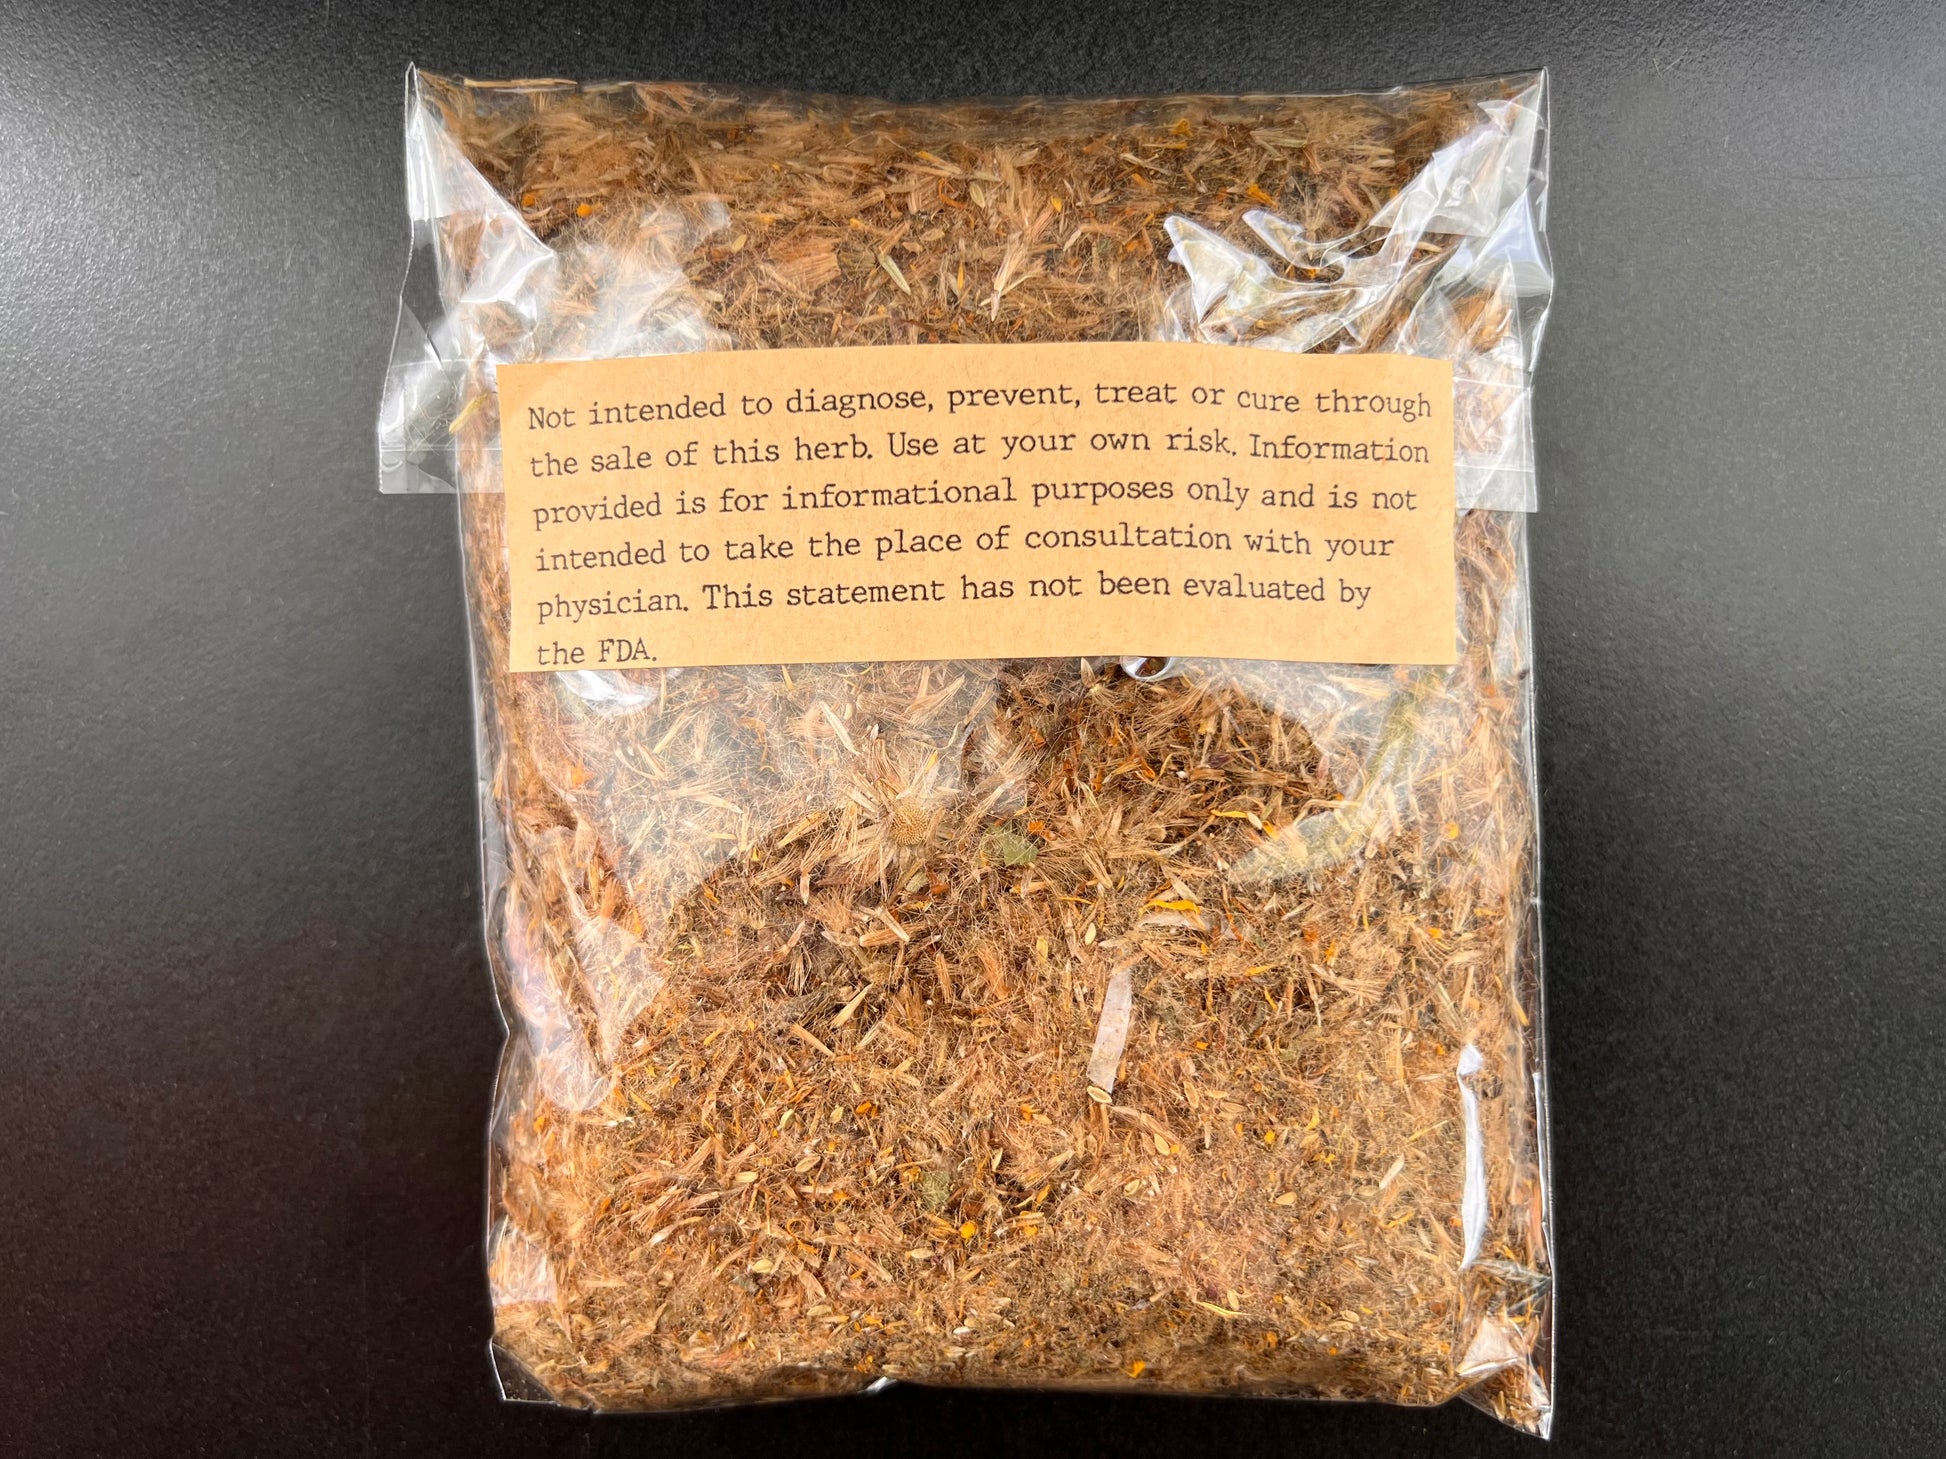 Arnica Dried Herb